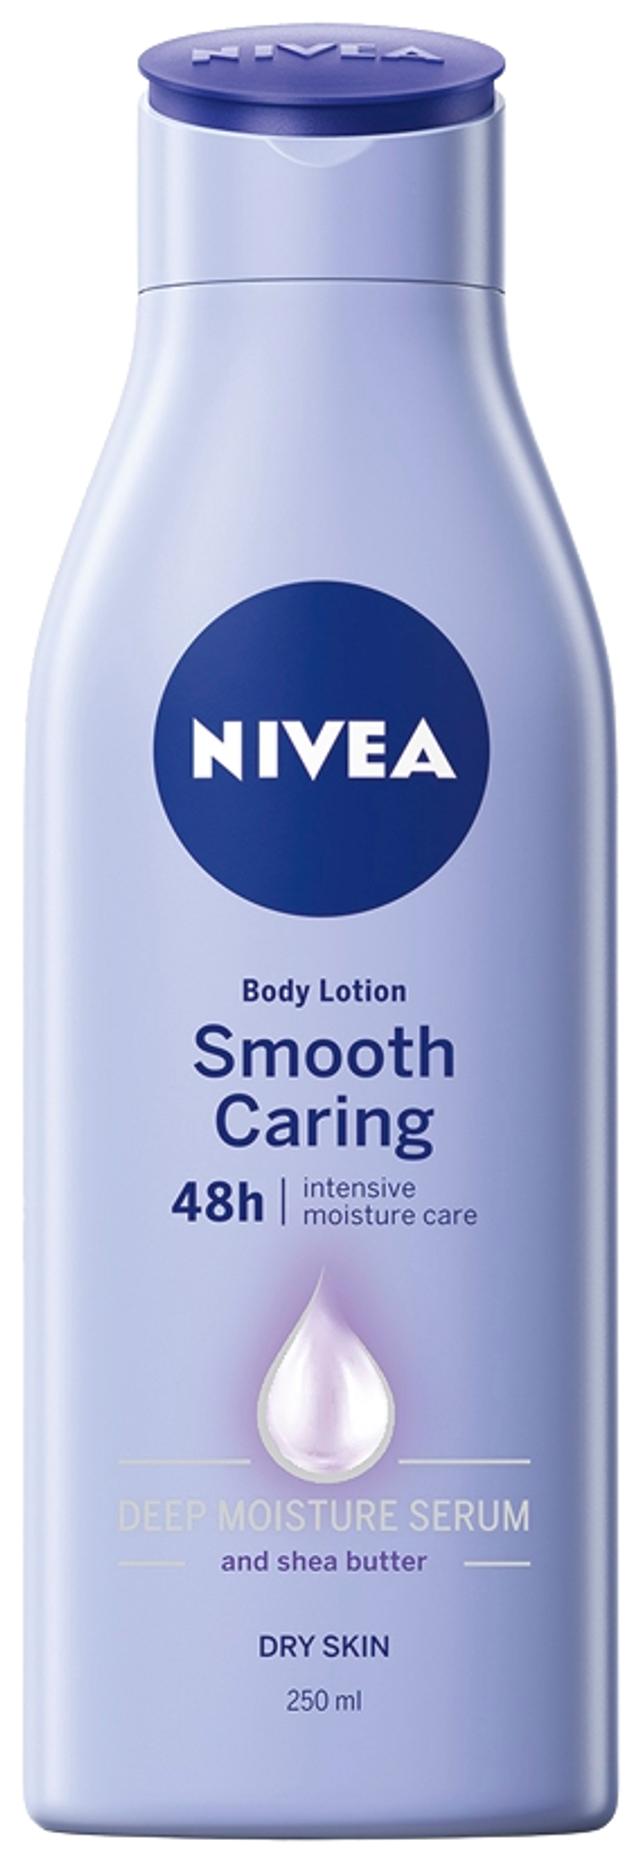 NIVEA 250ml Smooth Caring Body Lotion vartaloemulsio kuivalle iholle